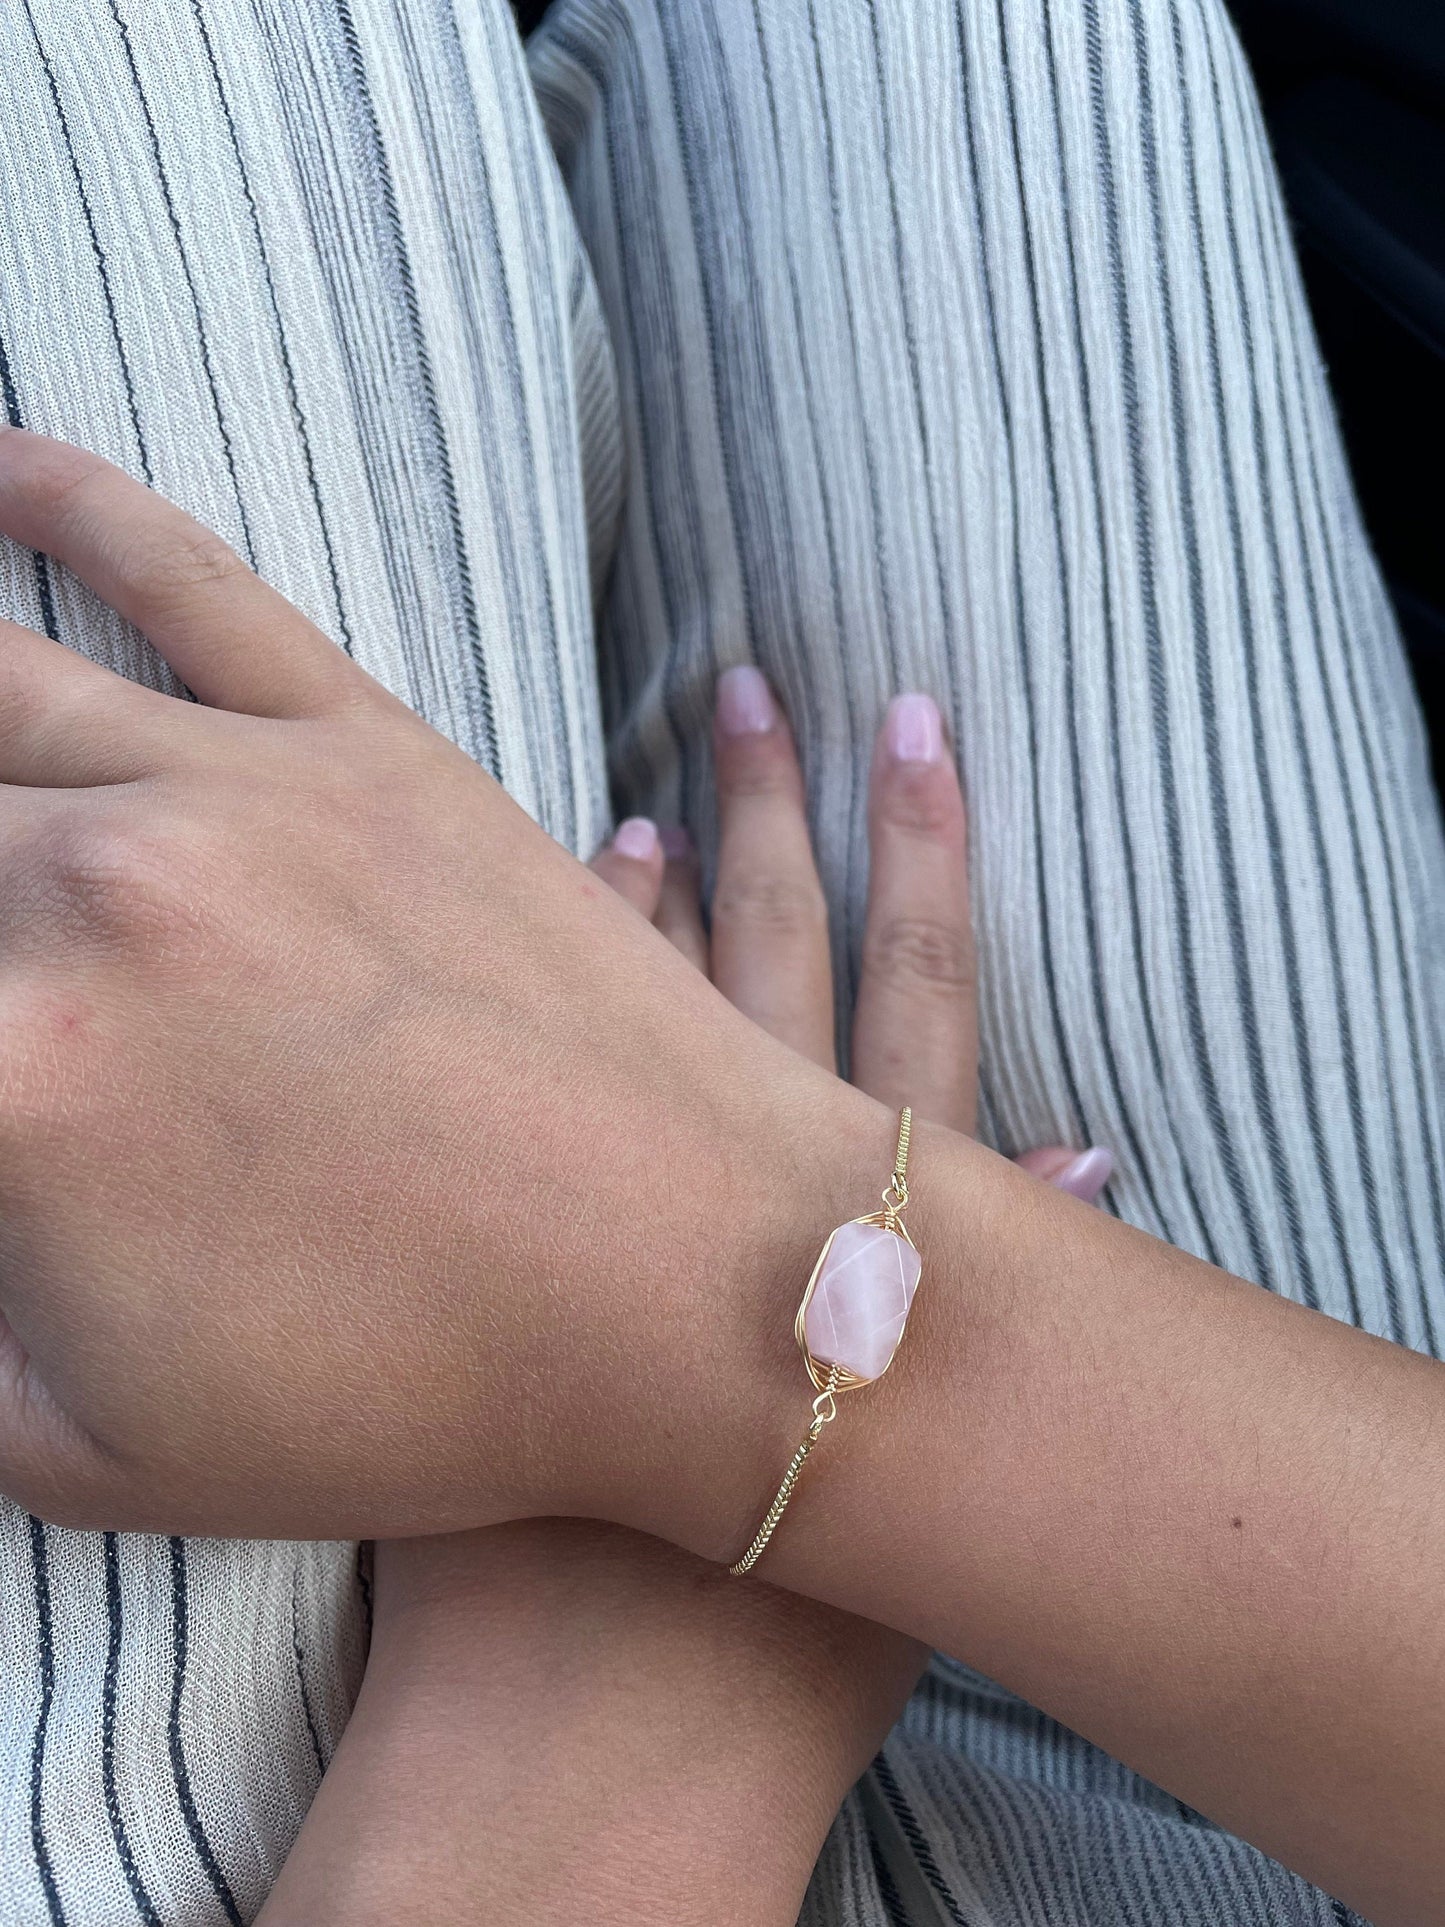 Rose Quartz Wire Wrapped Adjustable Gold Bracelet, January Birthstone Pink Bracelet